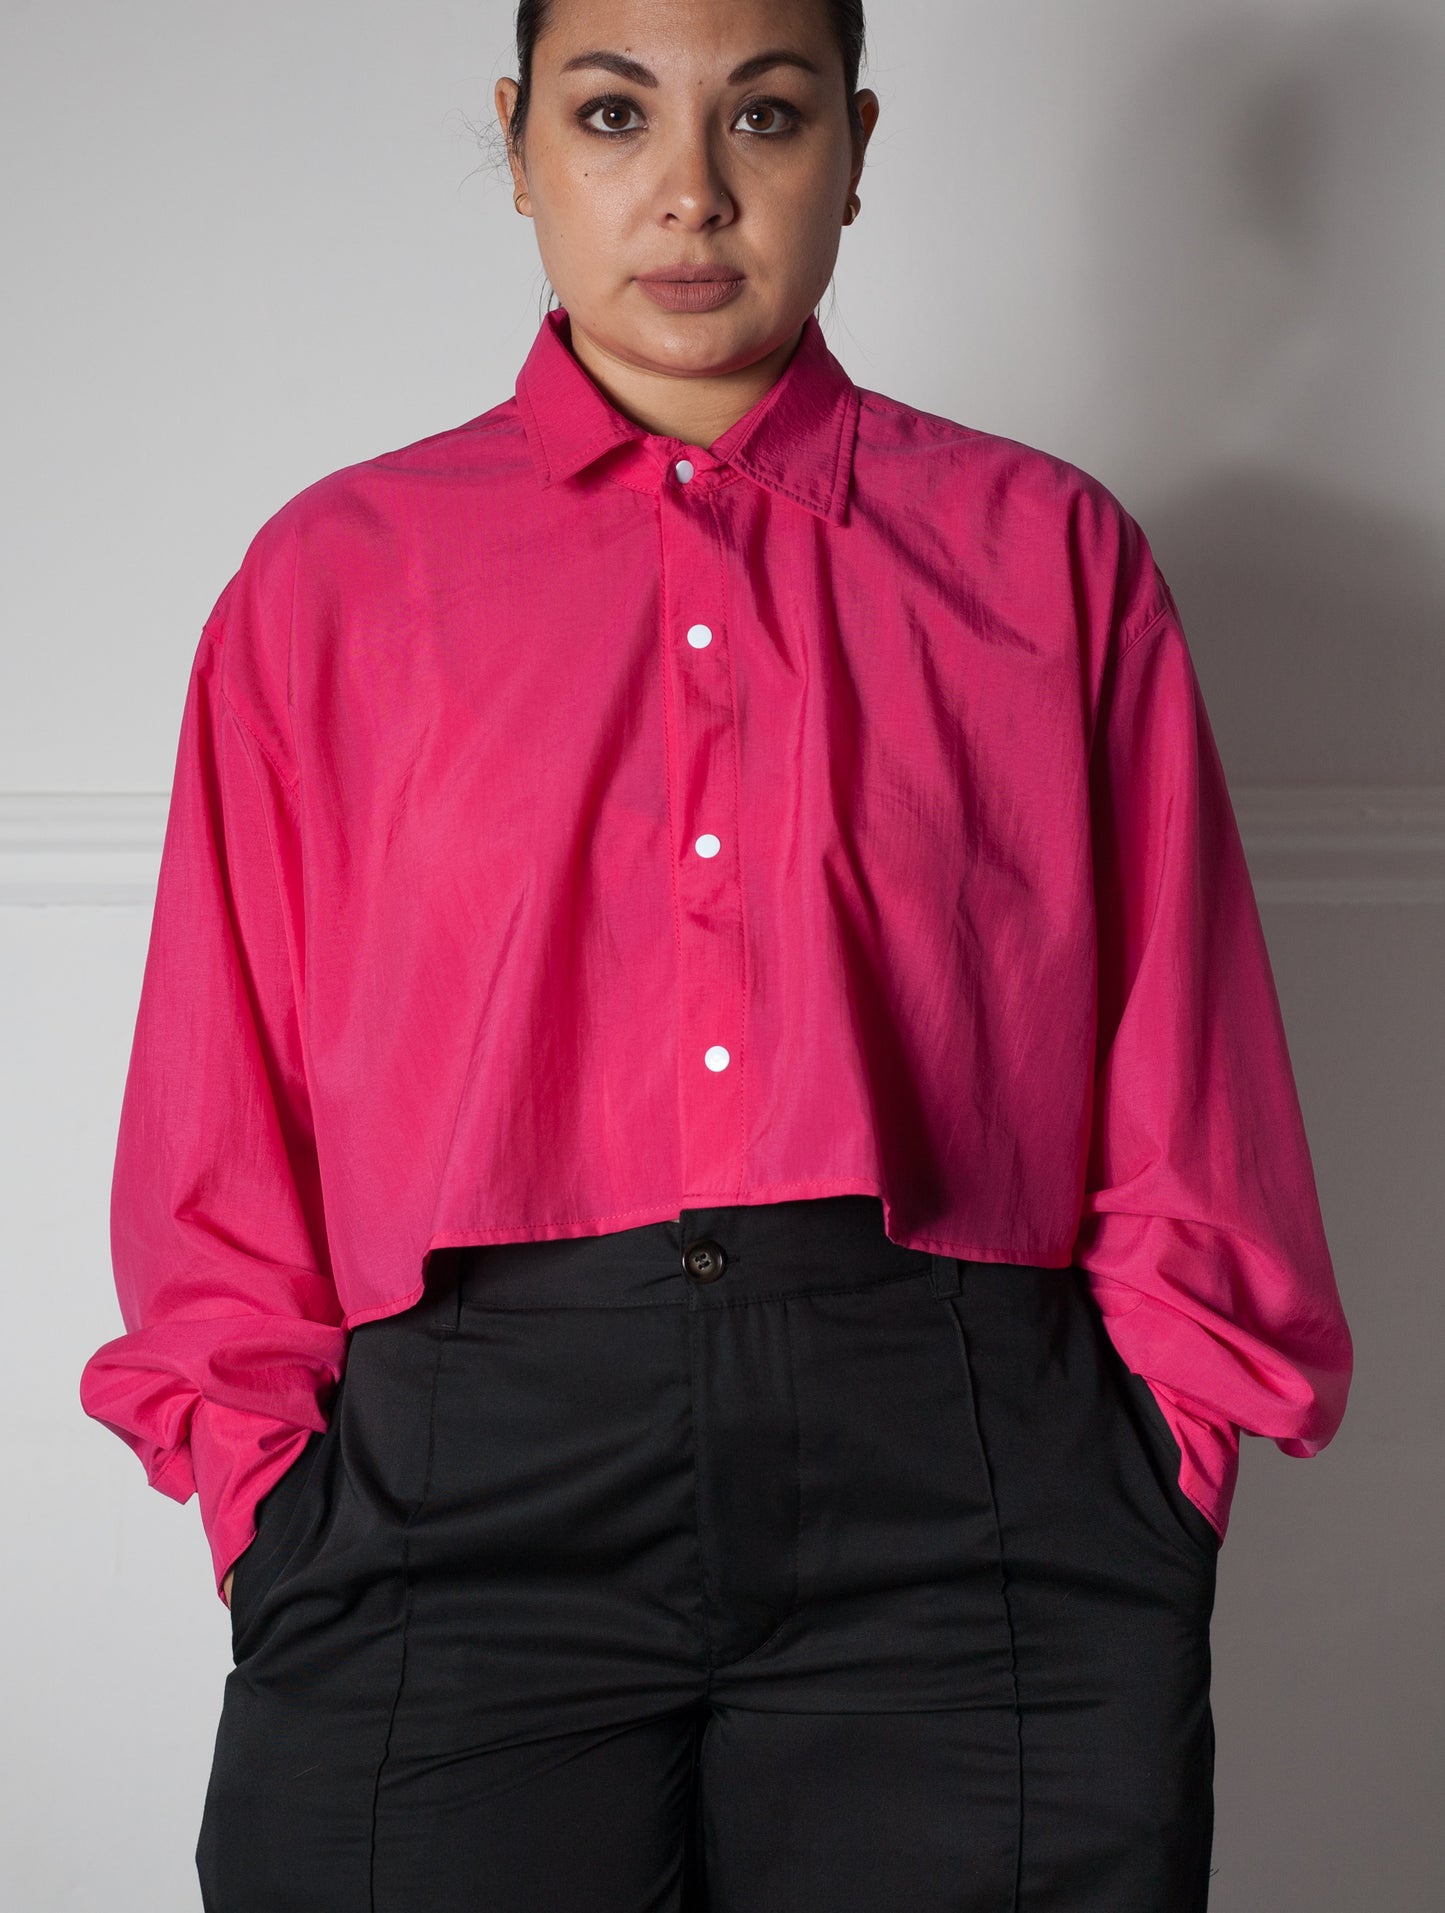 Cropped Shirt (Hot Pink)